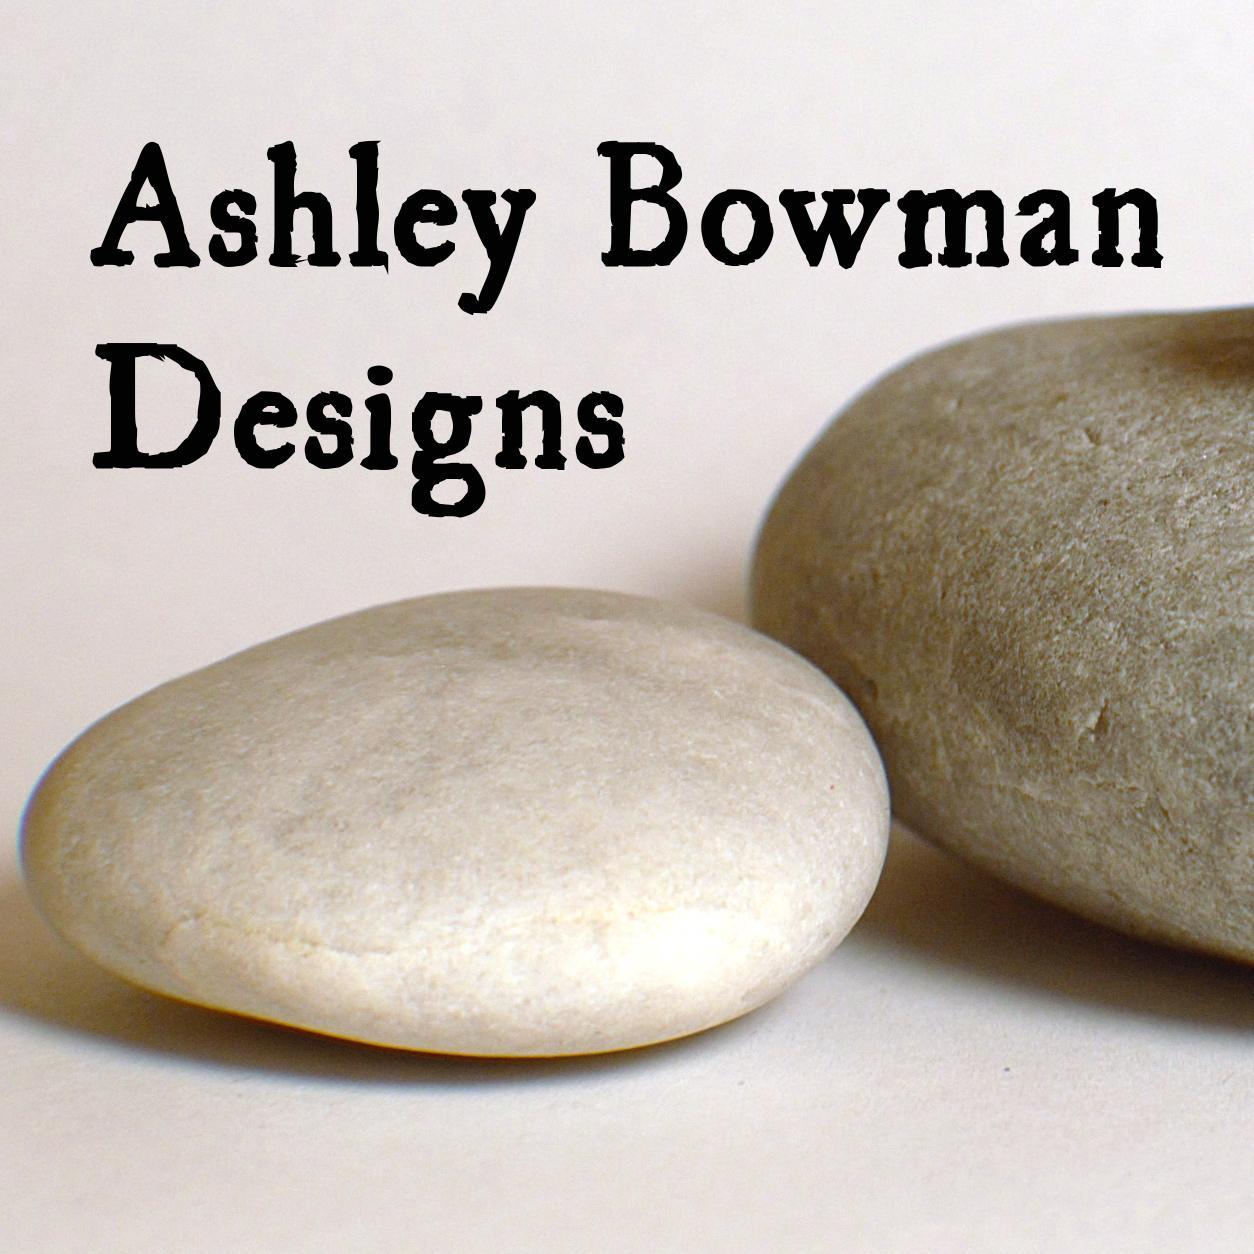 Ashley Bowman Handmade Jewlery  Check out my jewelry here
https://t.co/VVURF7DkET